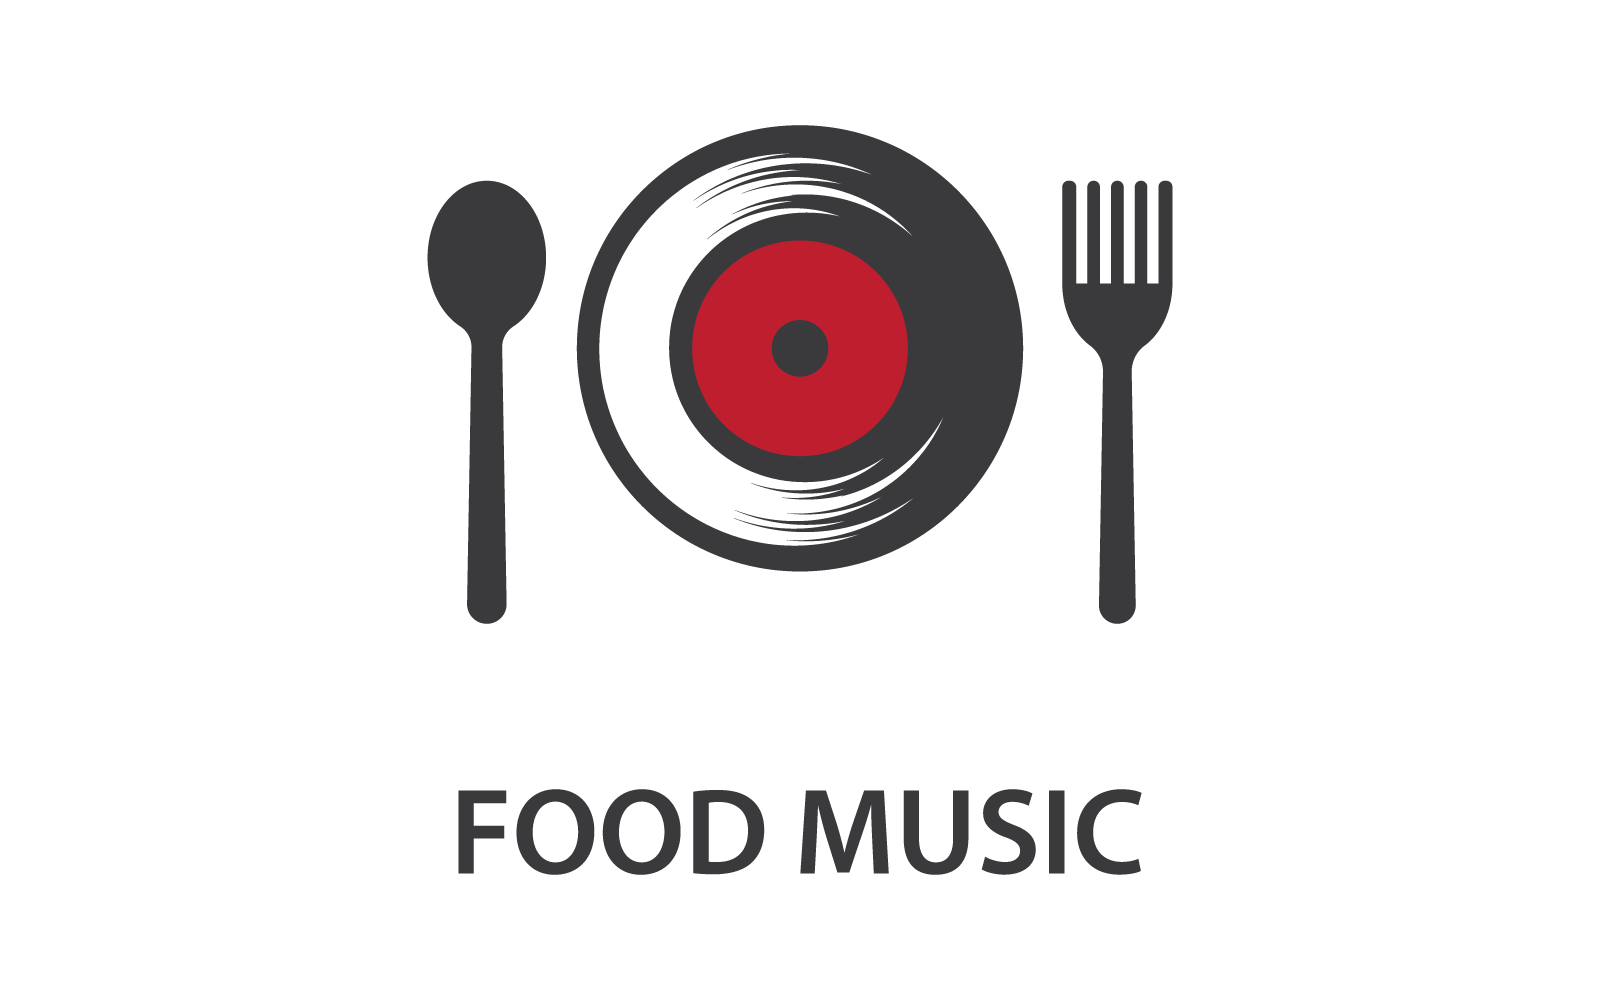 Music food illustration vector design